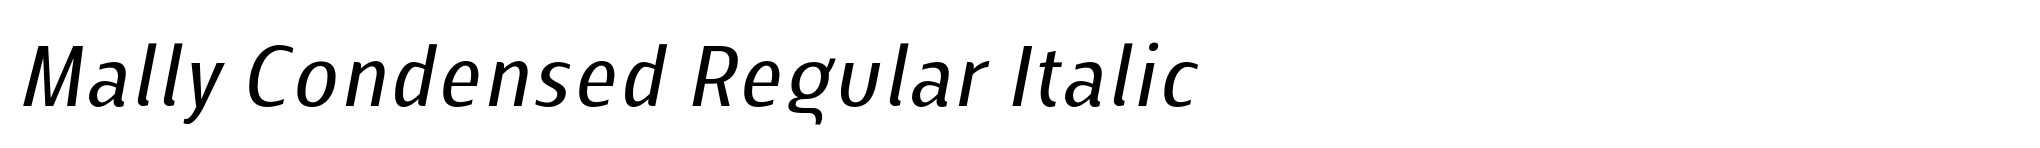 Mally Condensed Regular Italic image